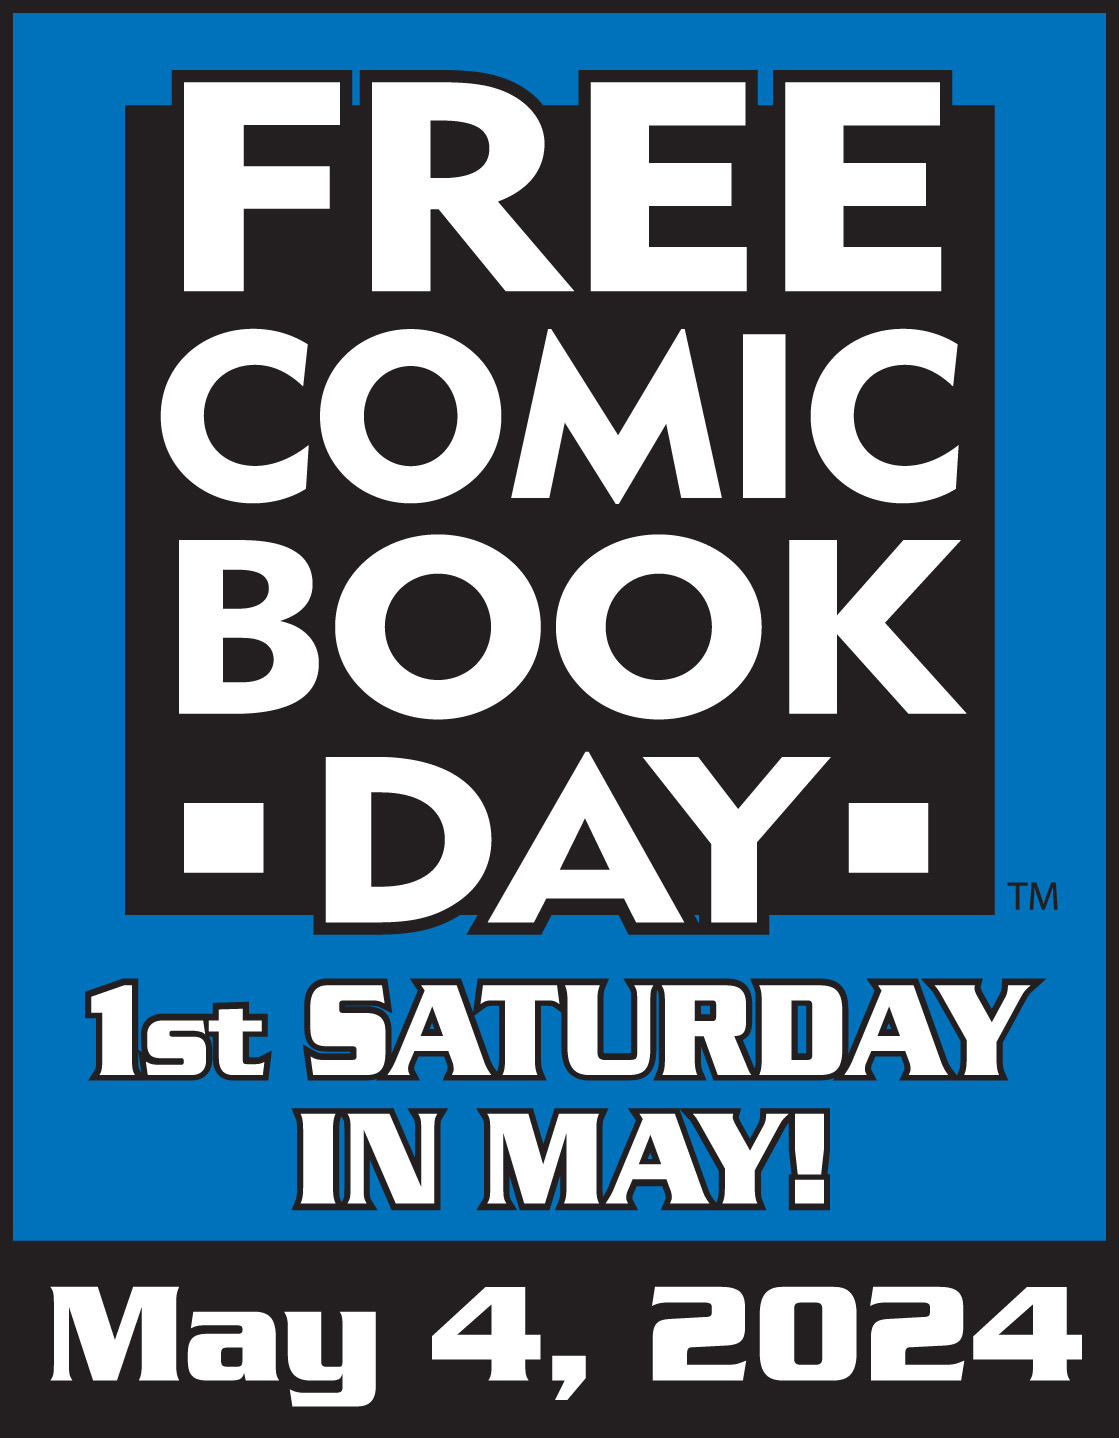 Free Comic Day logo